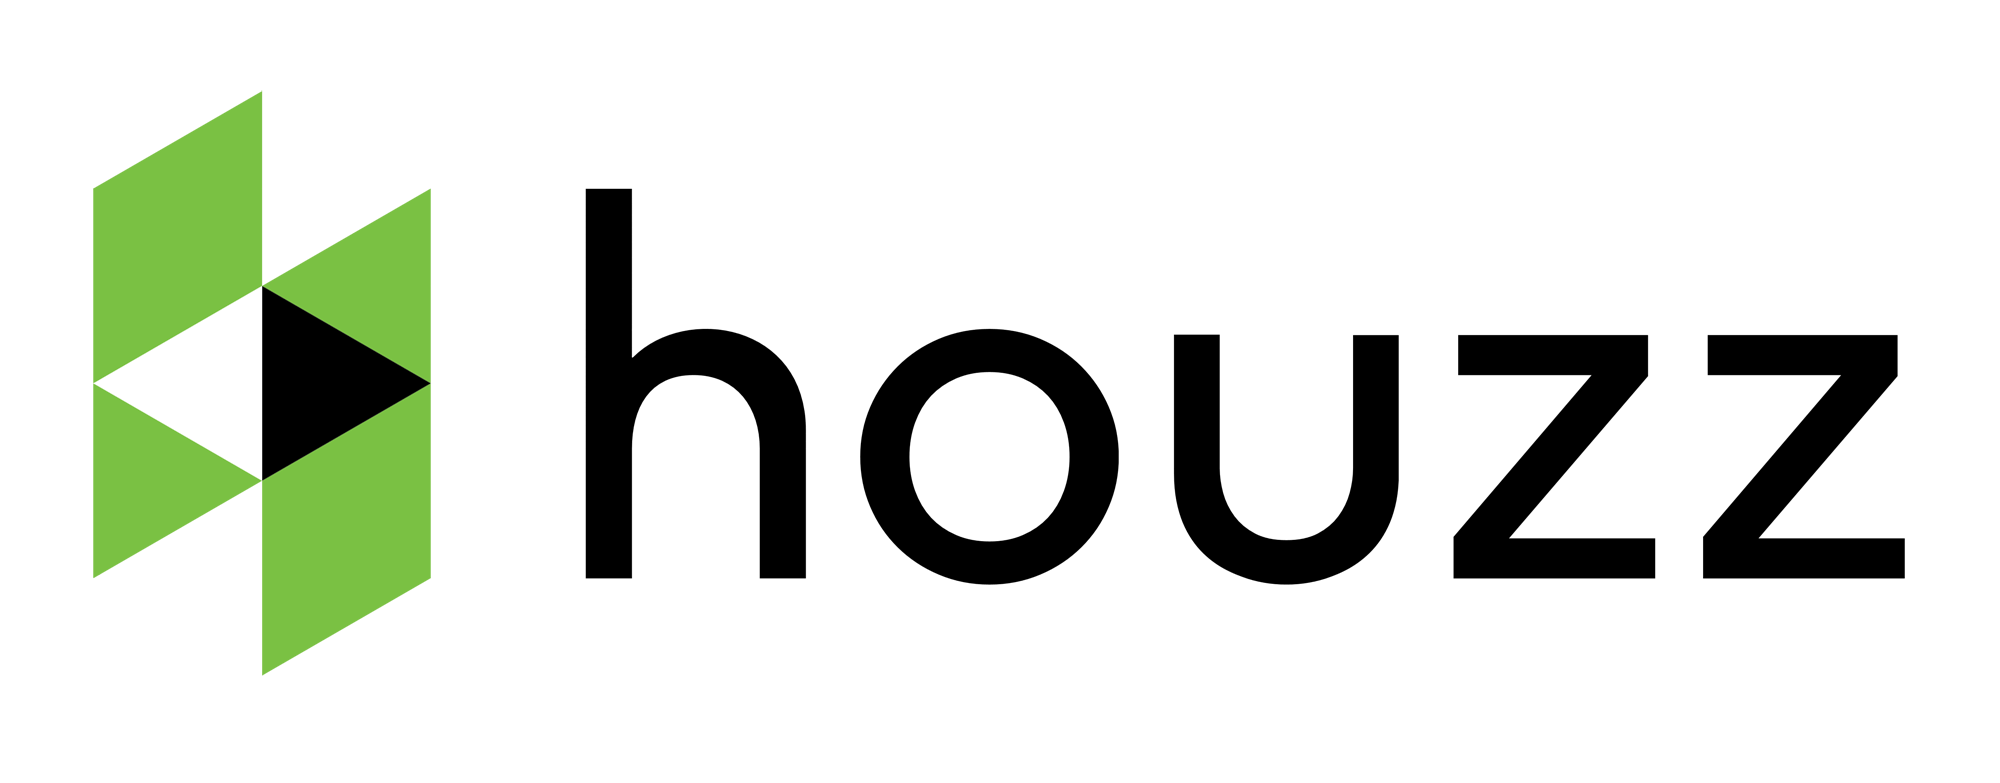 Houzz Logo - Houzz Logo, Houzz Symbol, Meaning, History and Evolution